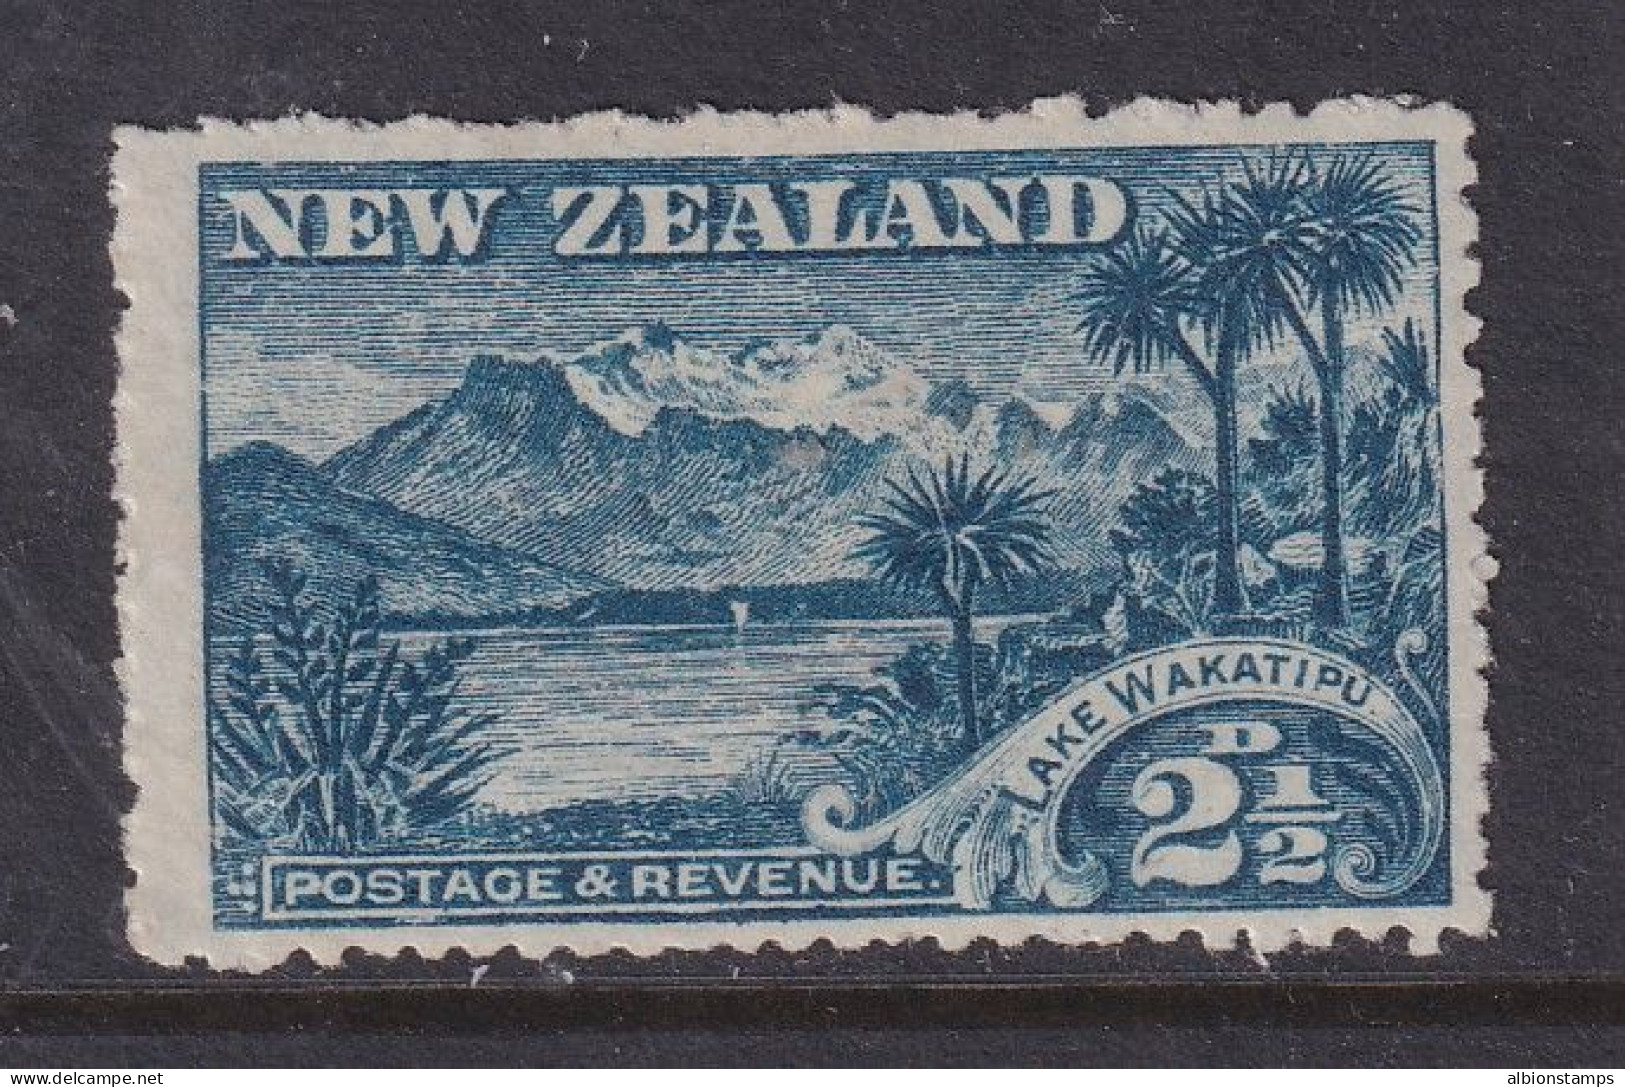 New Zealand, Scott 111 (SG 320), MLH - Unused Stamps